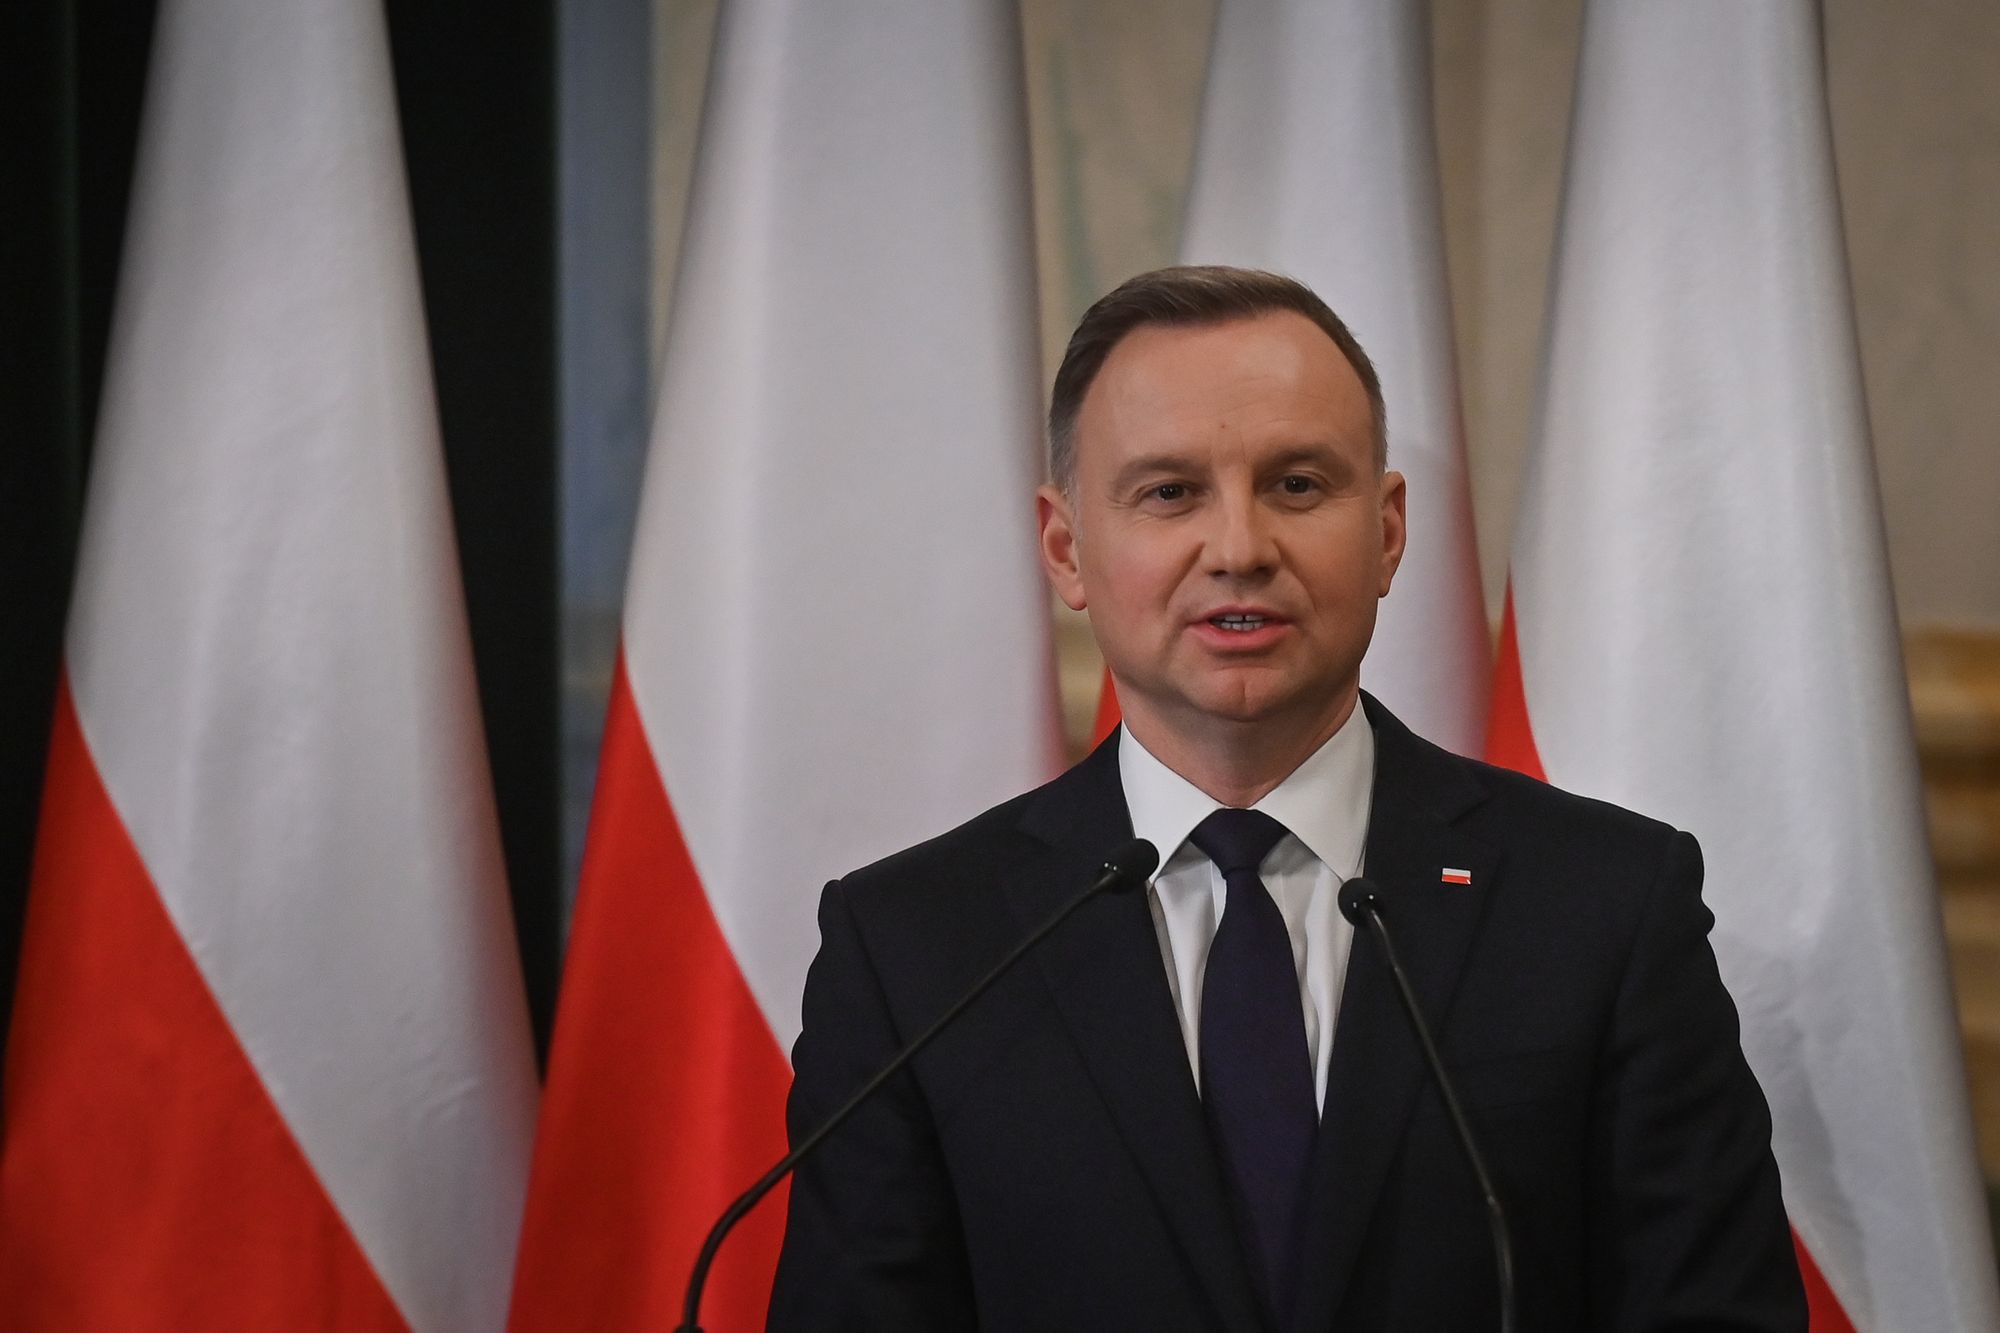 Poland extends protection for Ukrainian refugees until June 30